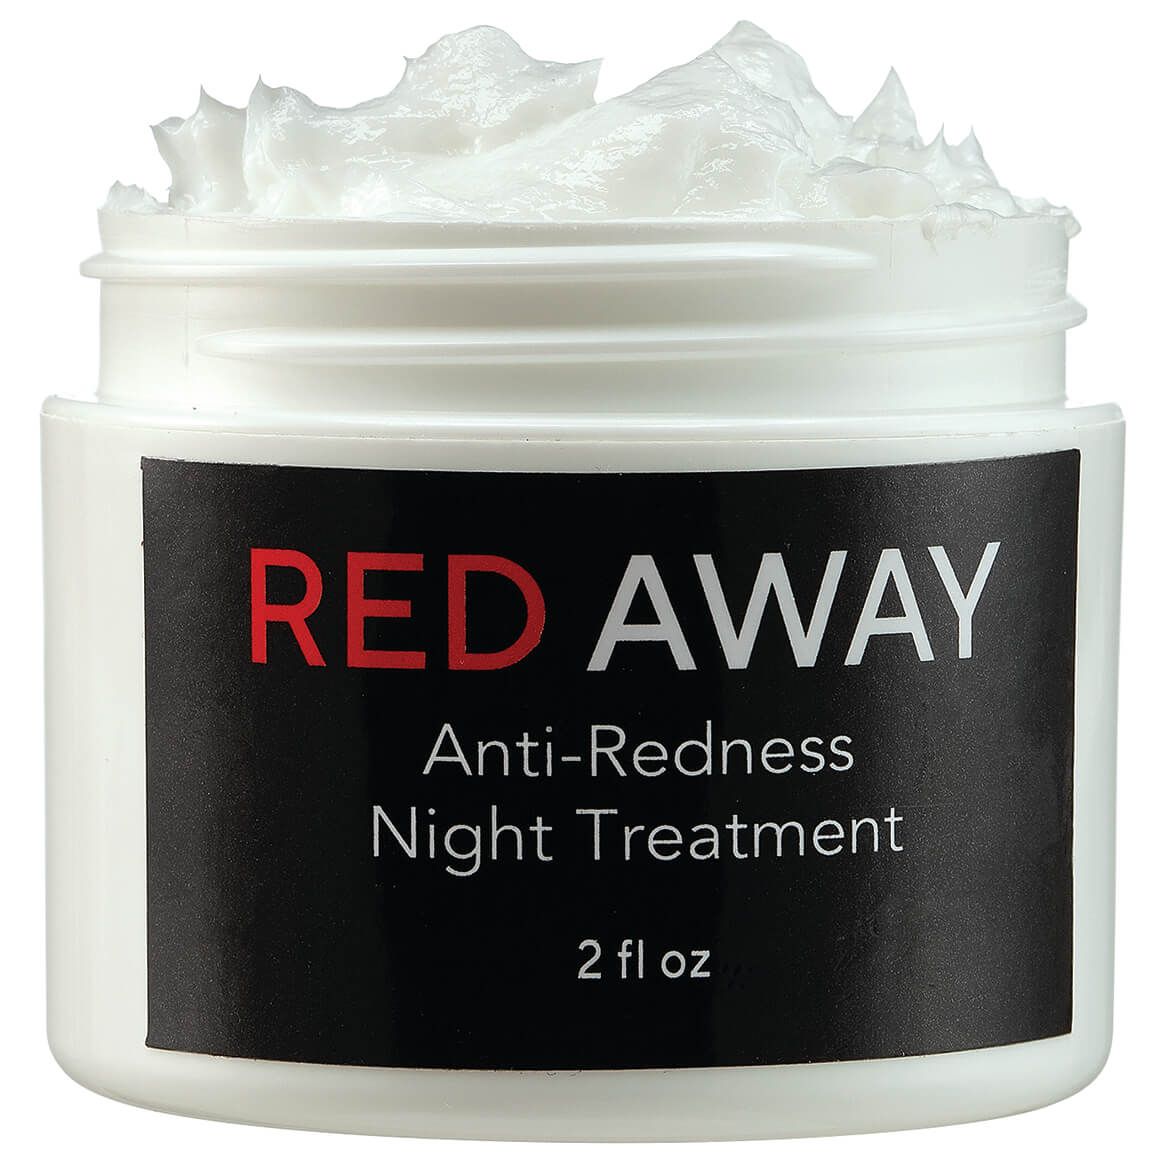 Red Away Anti-Redness Night Treatment + '-' + 375139